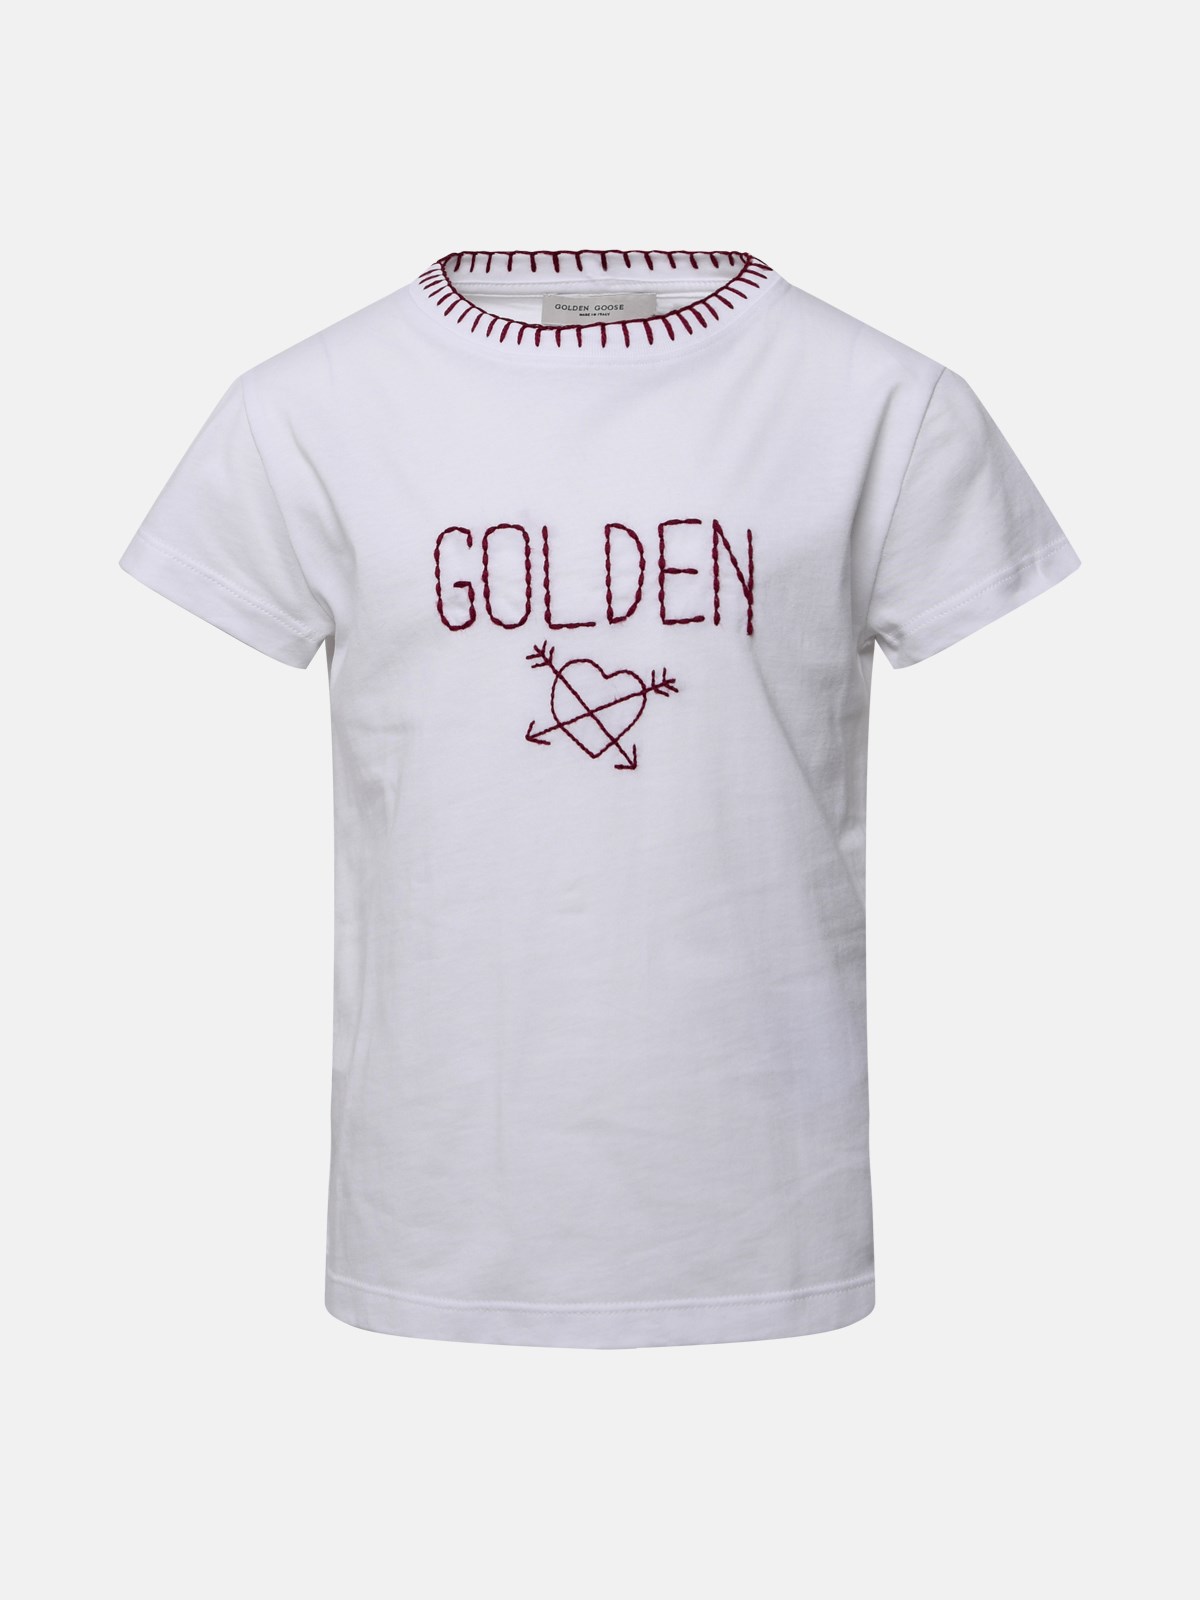 Golden Goose Kids' White Cotton T-shirt